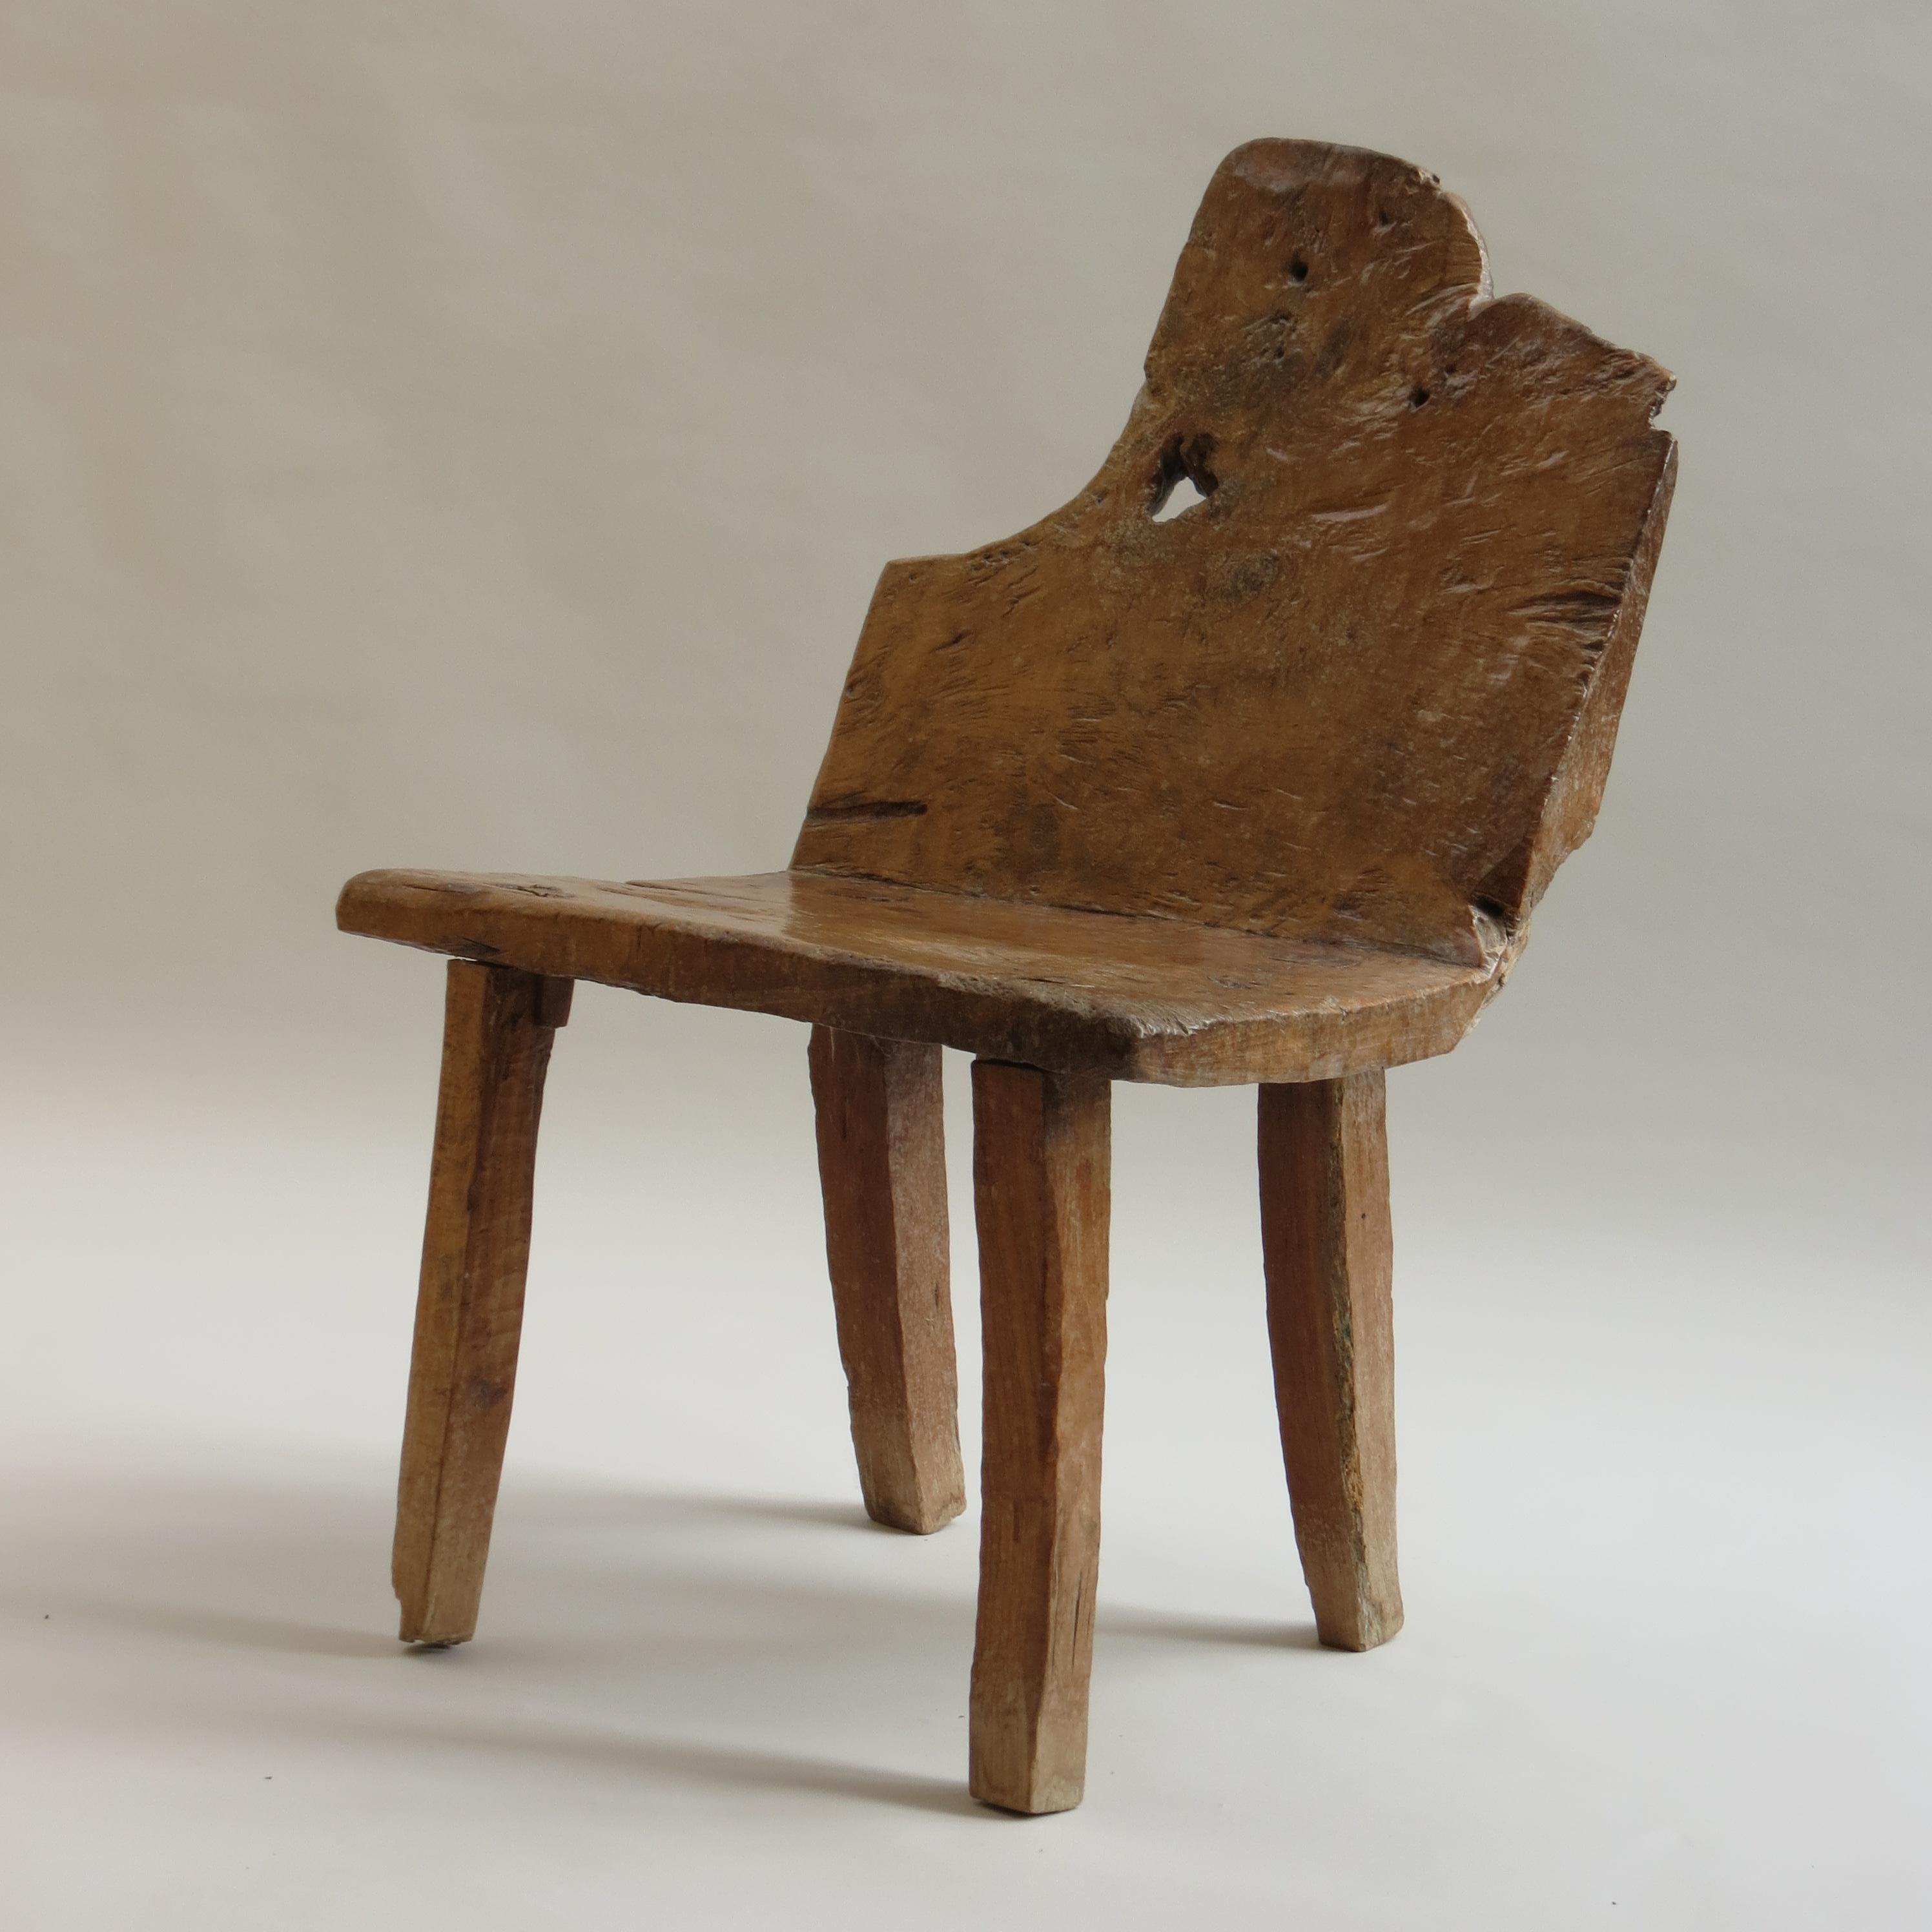 Hand-Crafted Rare Primitive Walnut Chair 19th Century English Wabi Sabi style